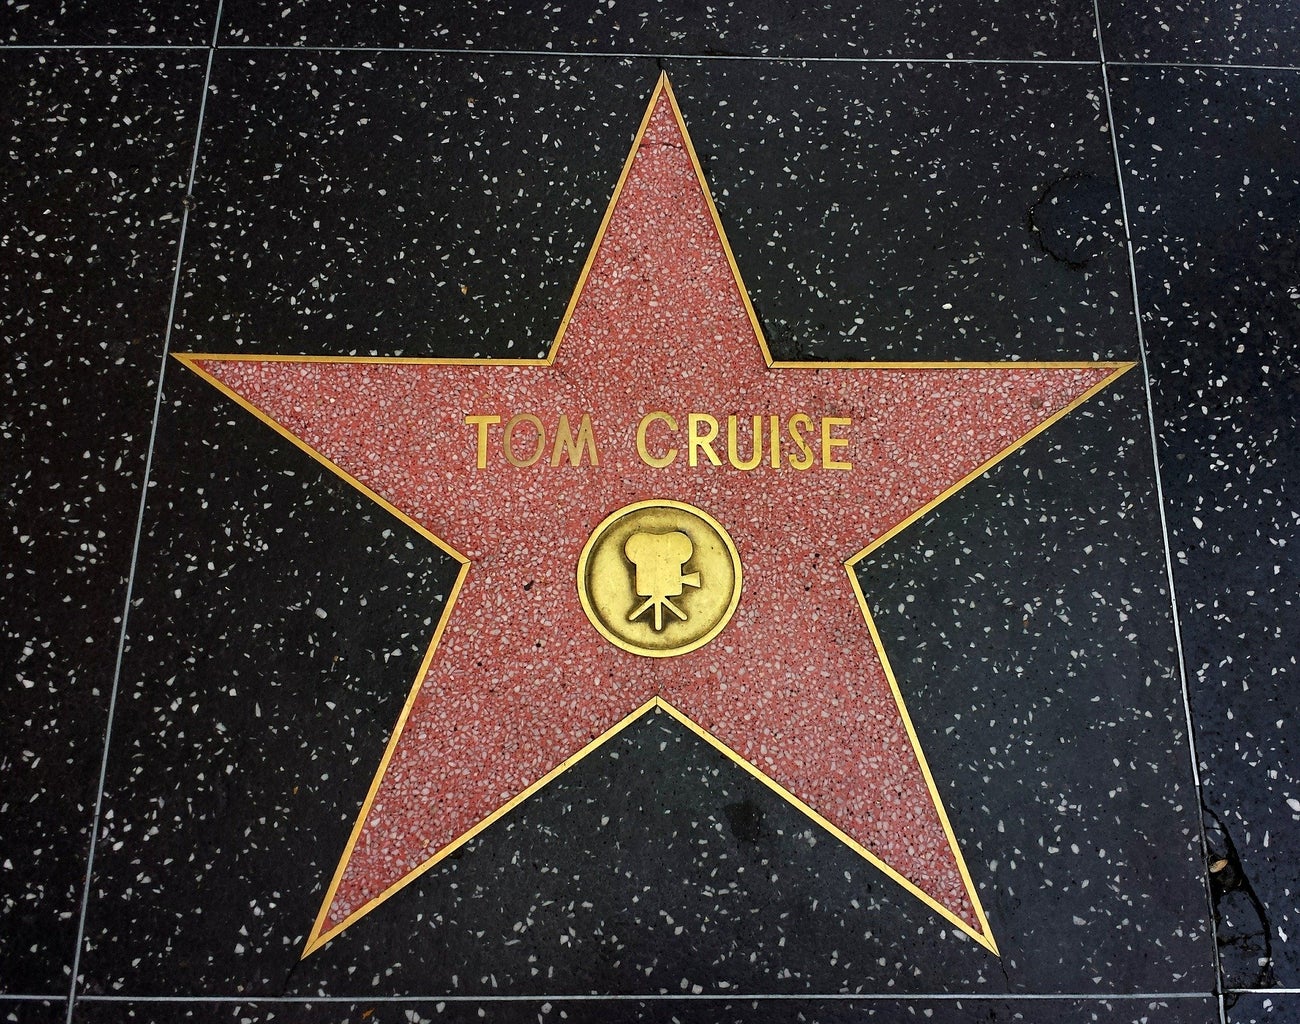 Tom Cruise star